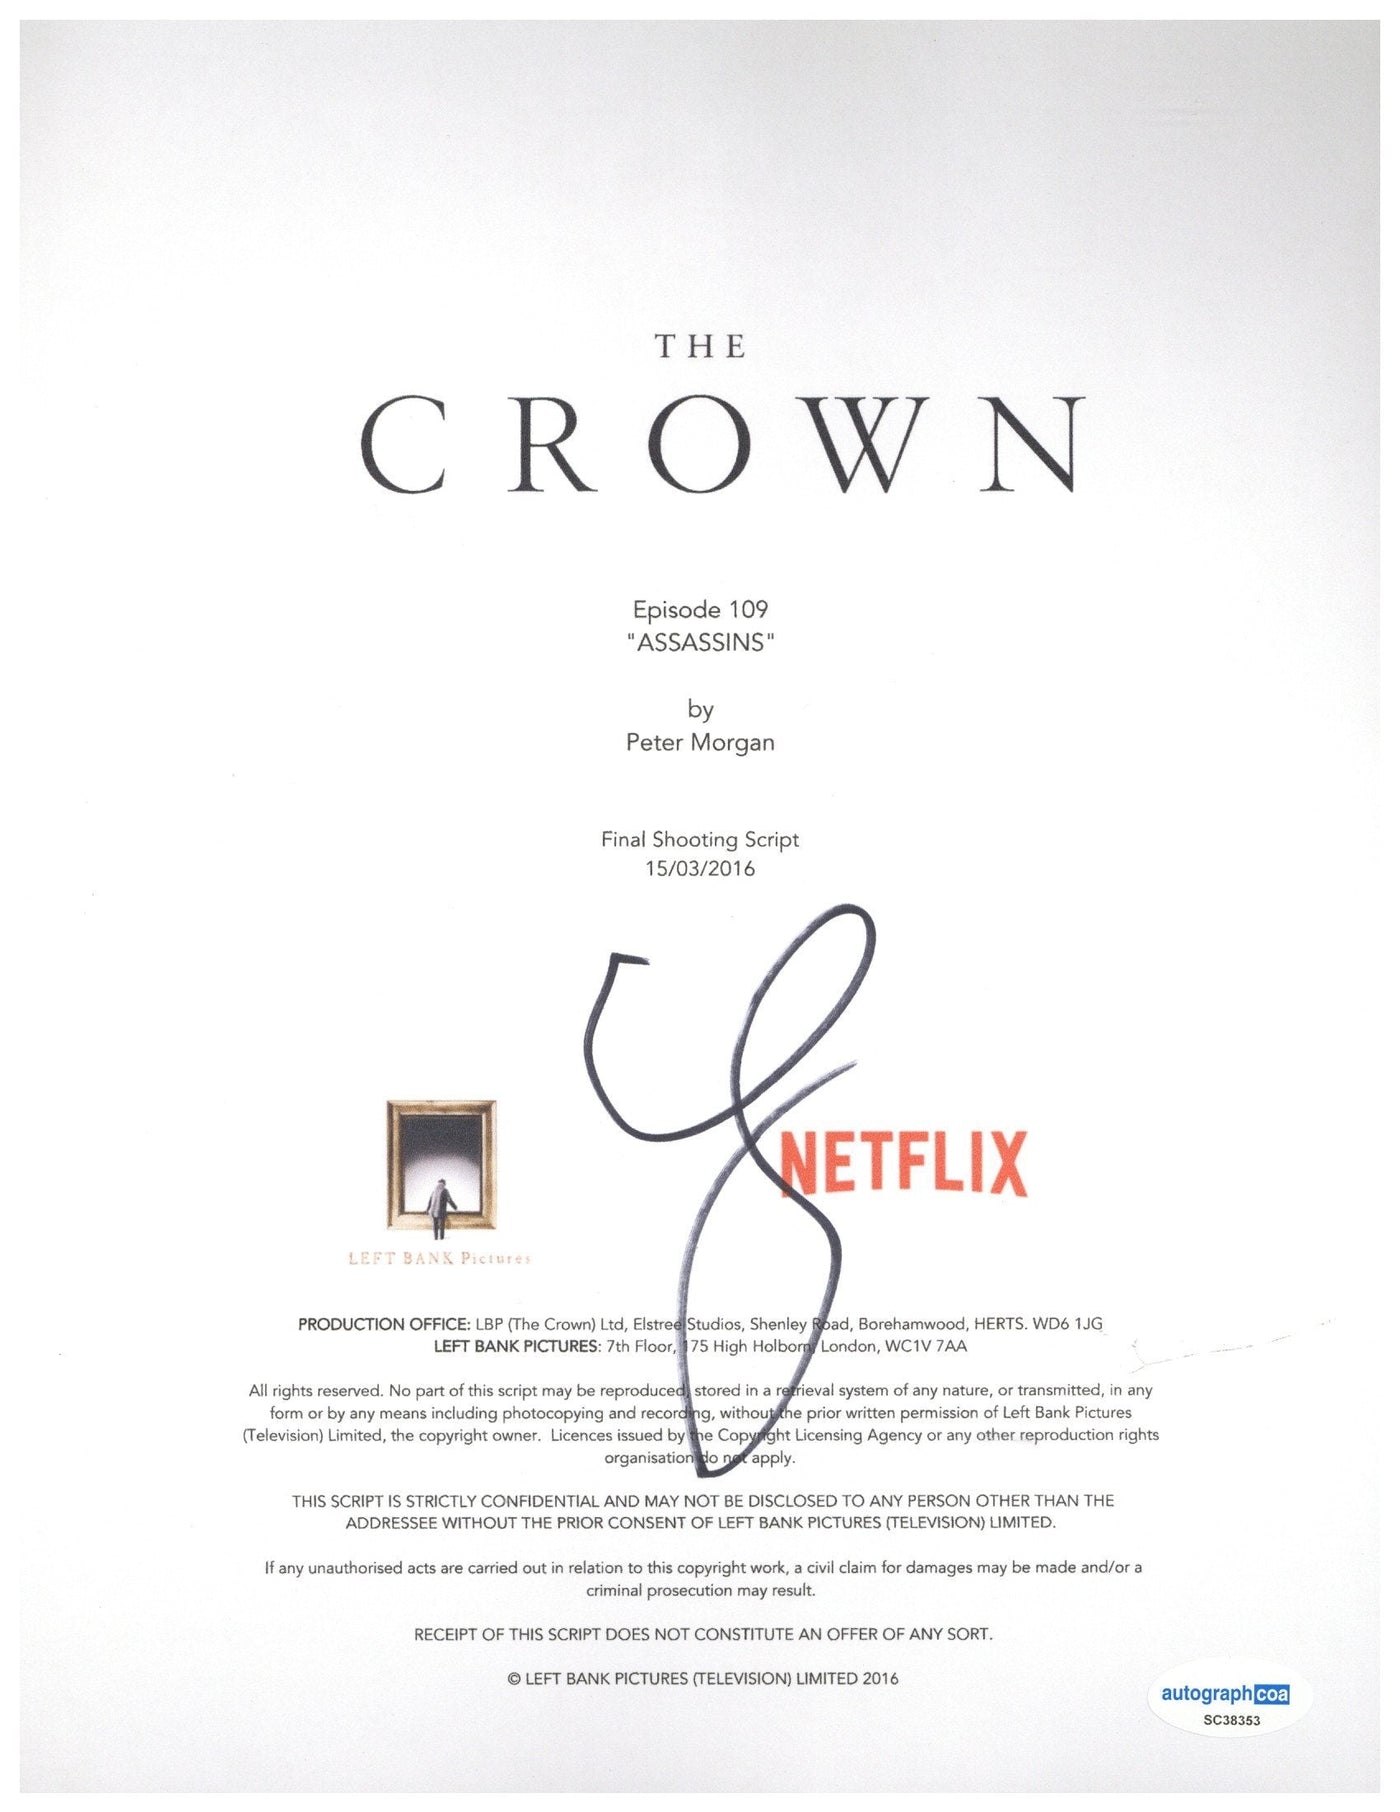 Claire Foy Signed Script Cover The Crown Autographed JSA COA